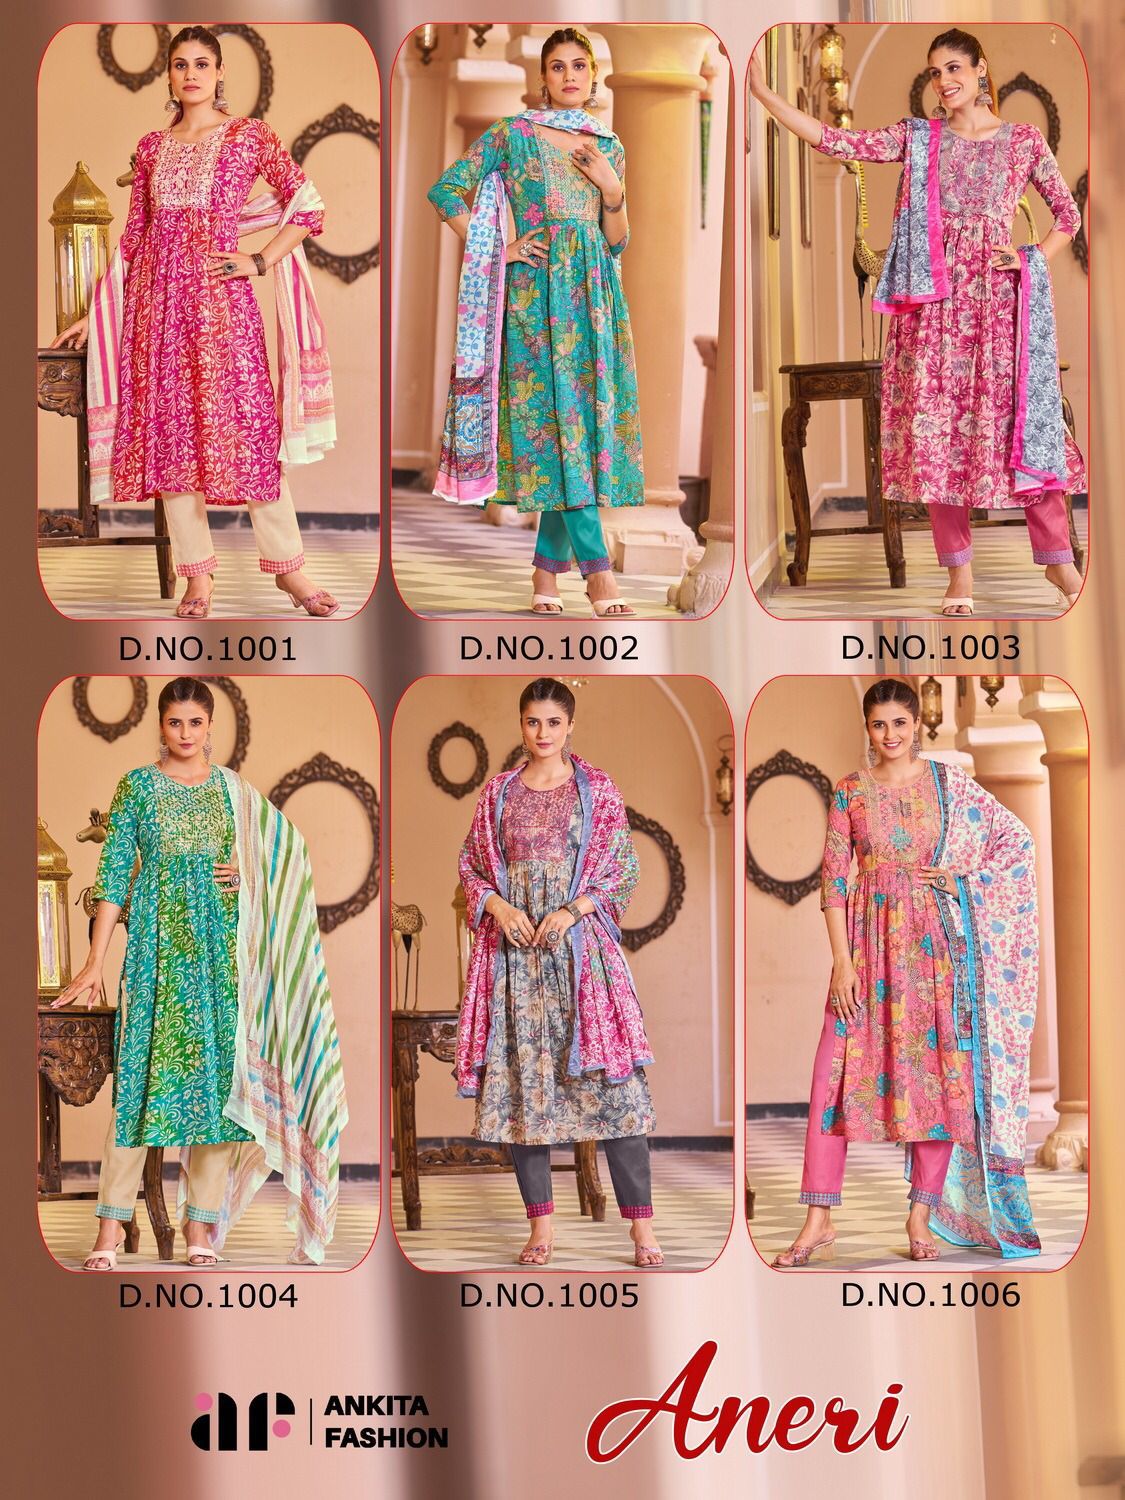 Ankita Fashion Aneri Vol 1 collection 2